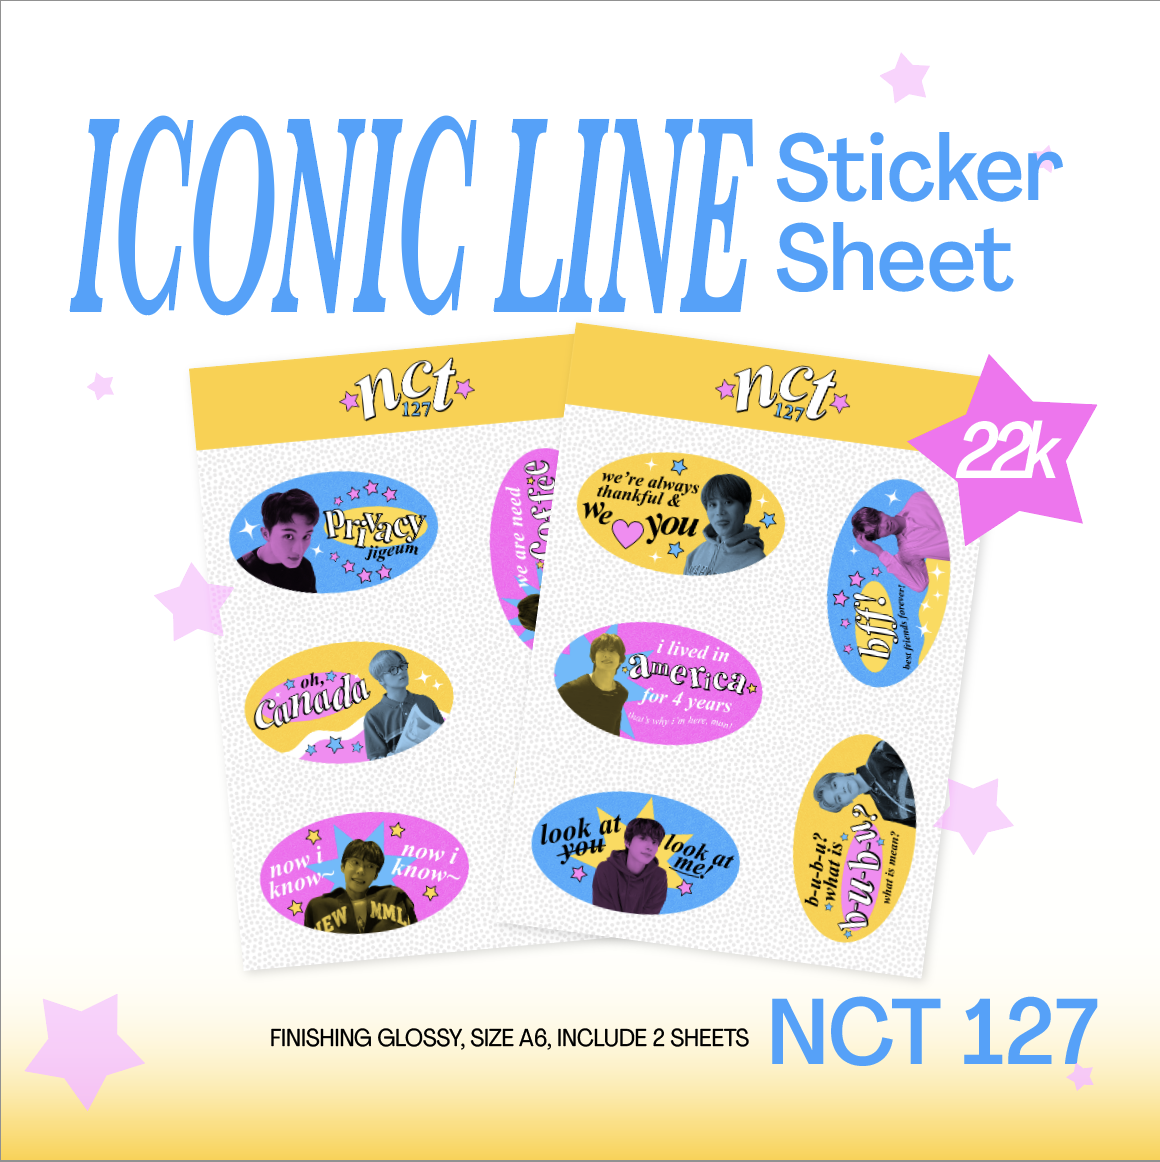 NCT 127 ICONIC LINE